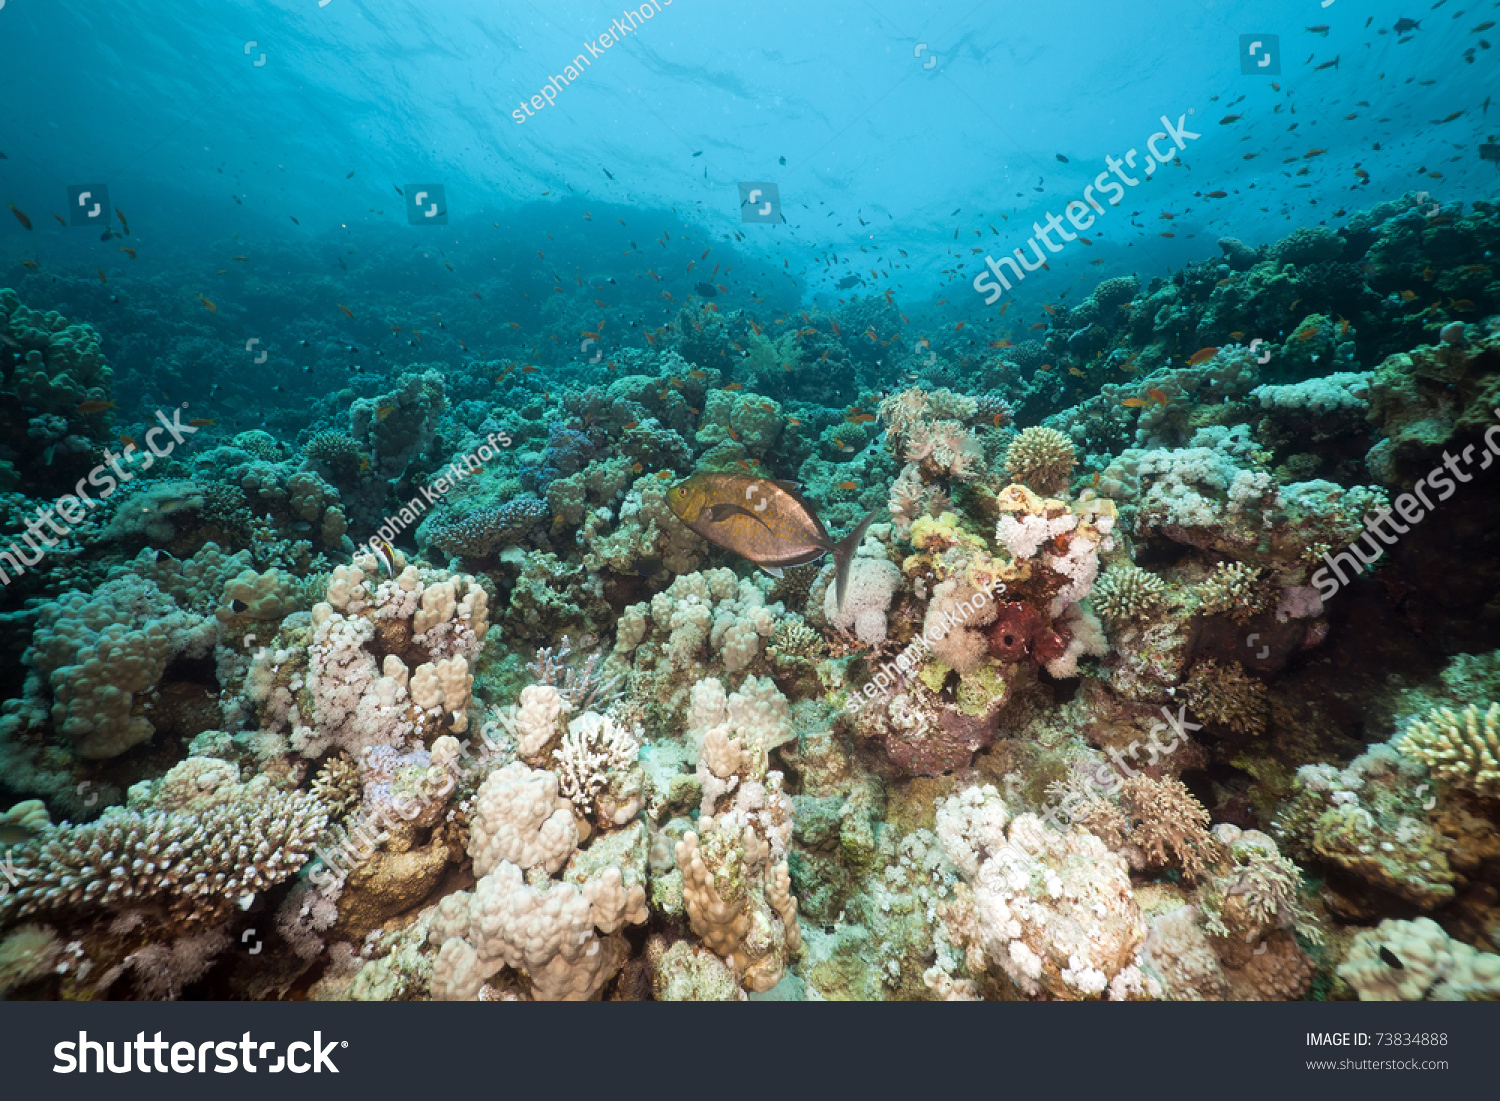 Underwater Scenery In The Red Sea. Stock Photo 73834888 : Shutterstock